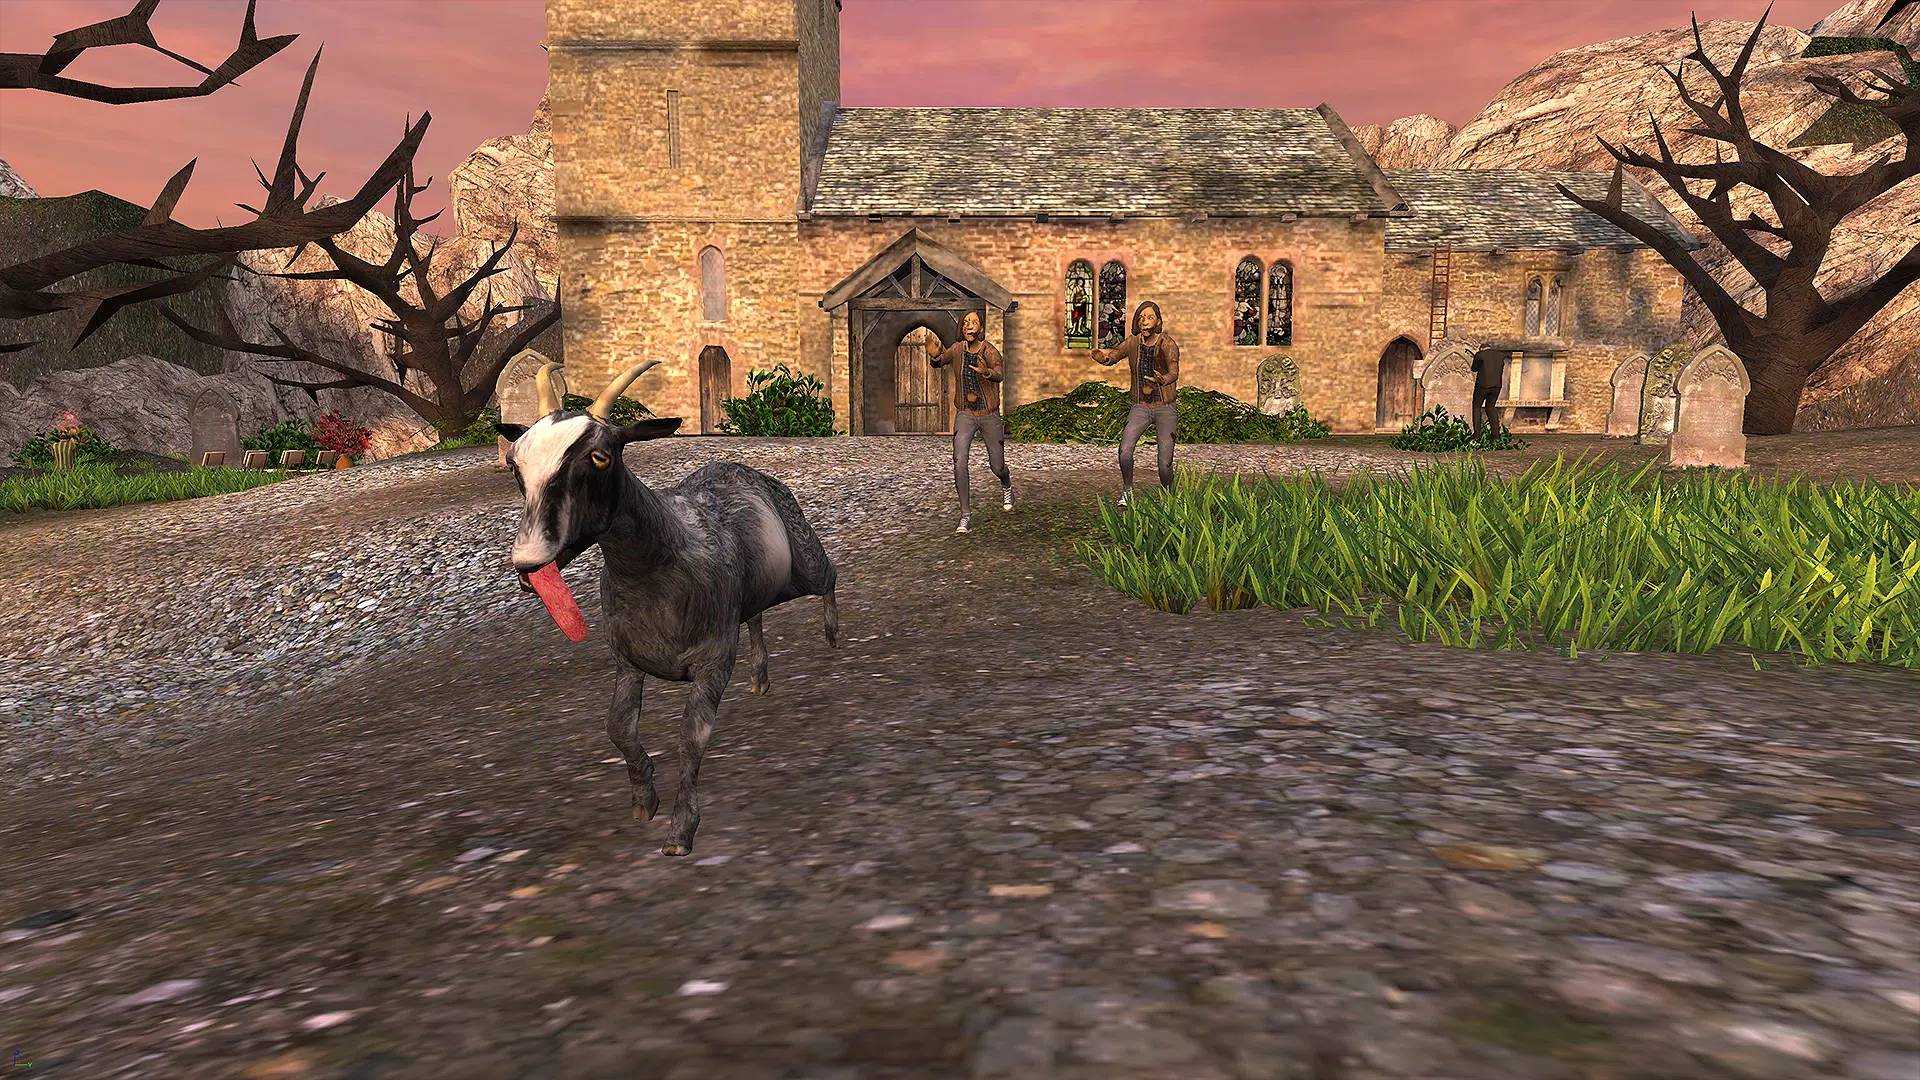 Sandbox games: a goat runs towards the camera